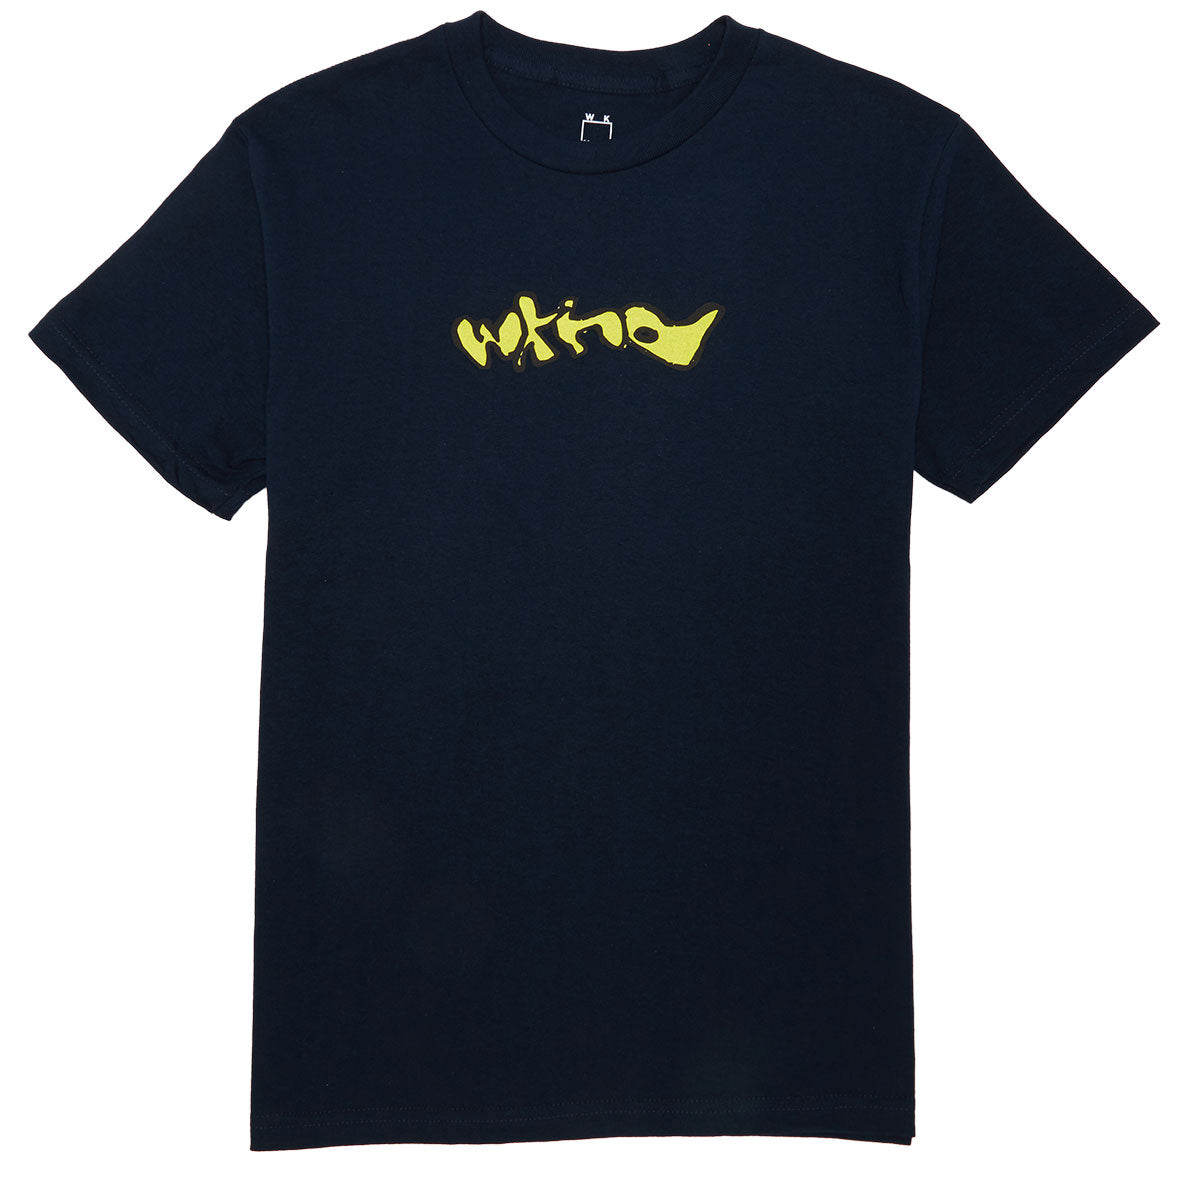 WKND Sanc T-Shirt - Navy image 1